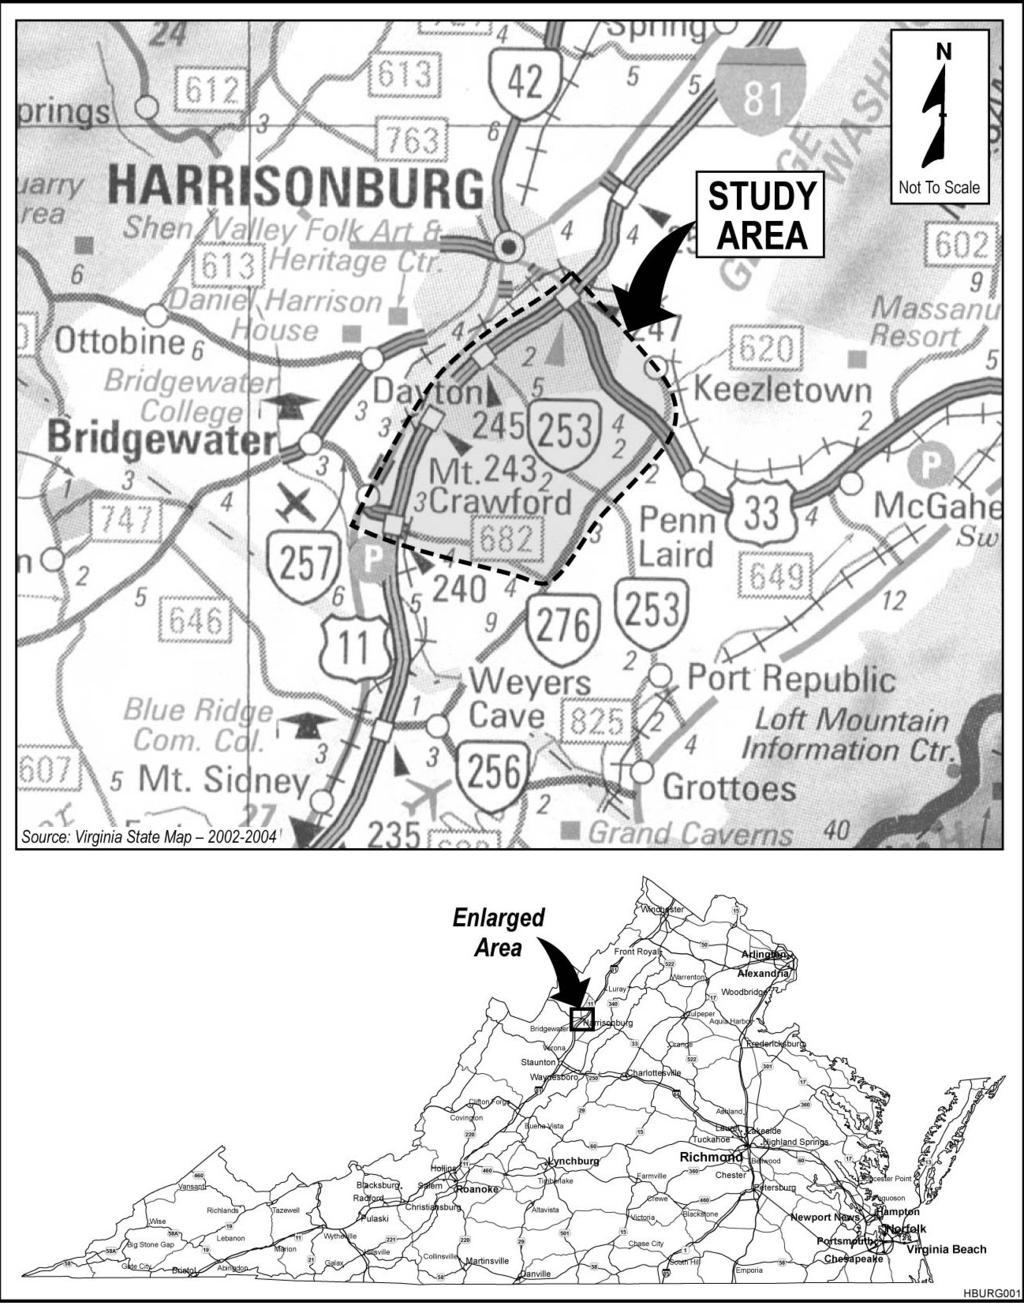 Harrisonburg Southeast Connector Location Study Summary